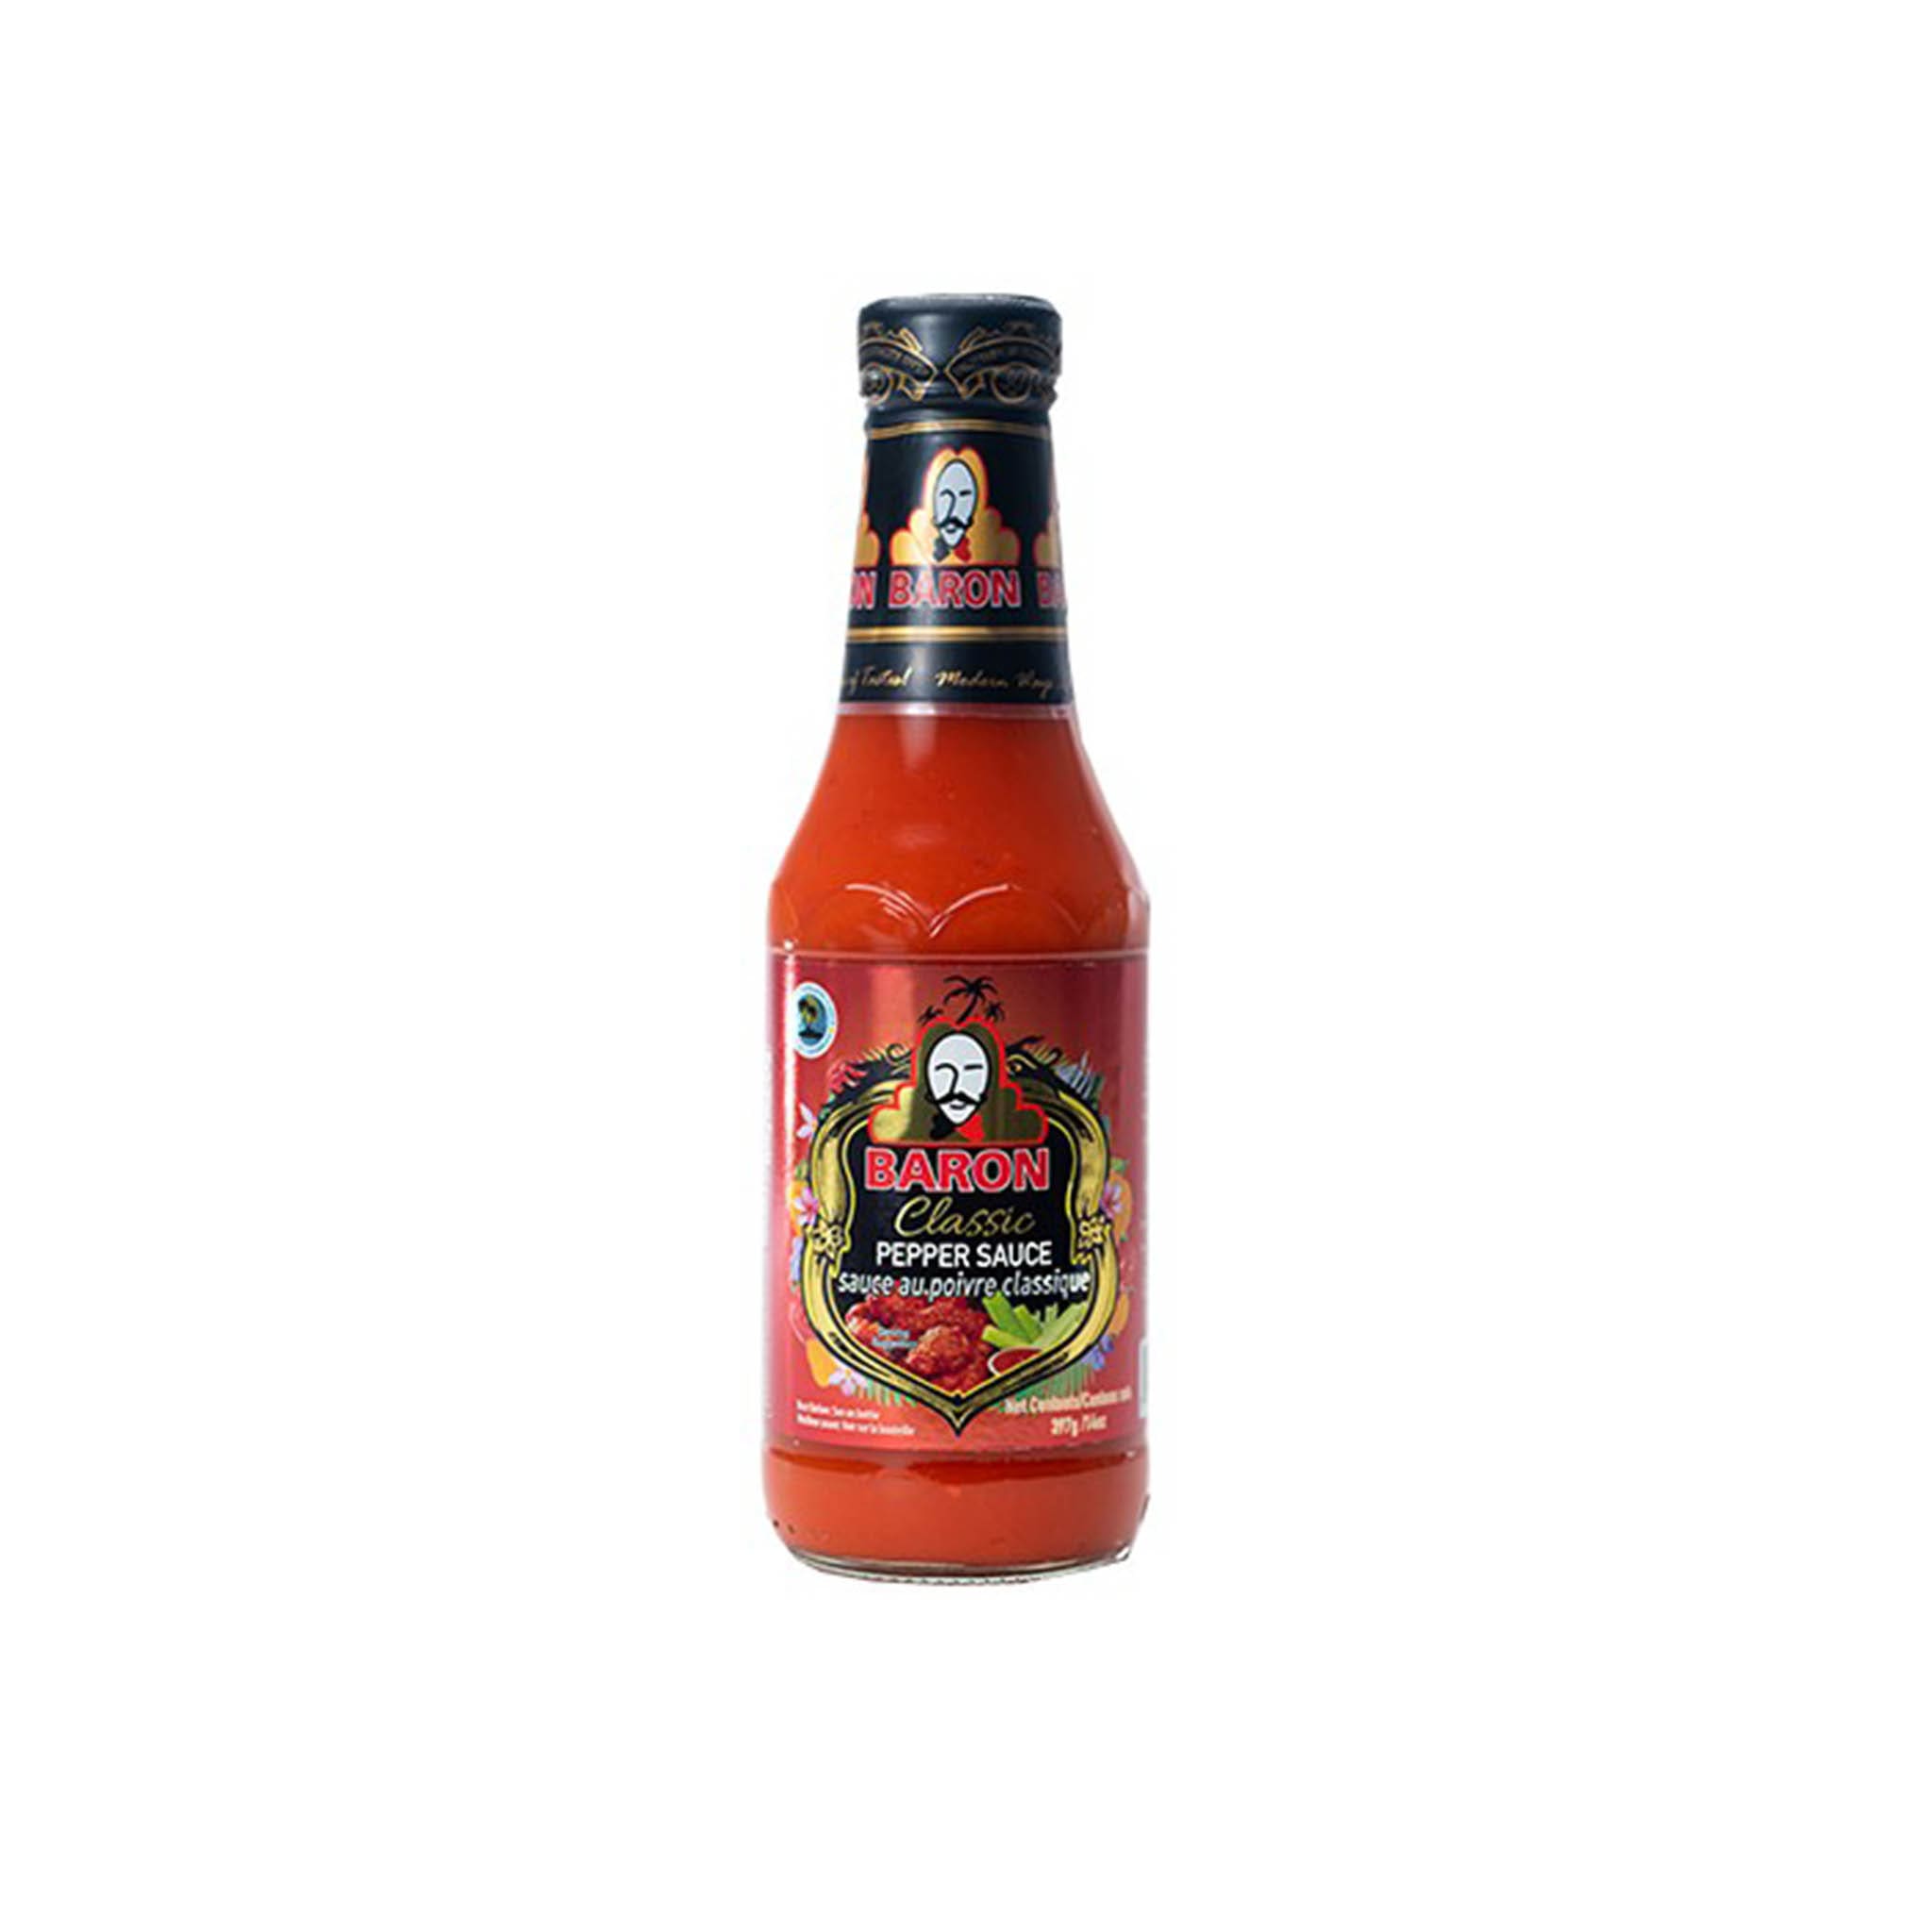 Baron Classic Pepper Sauce, 397ml